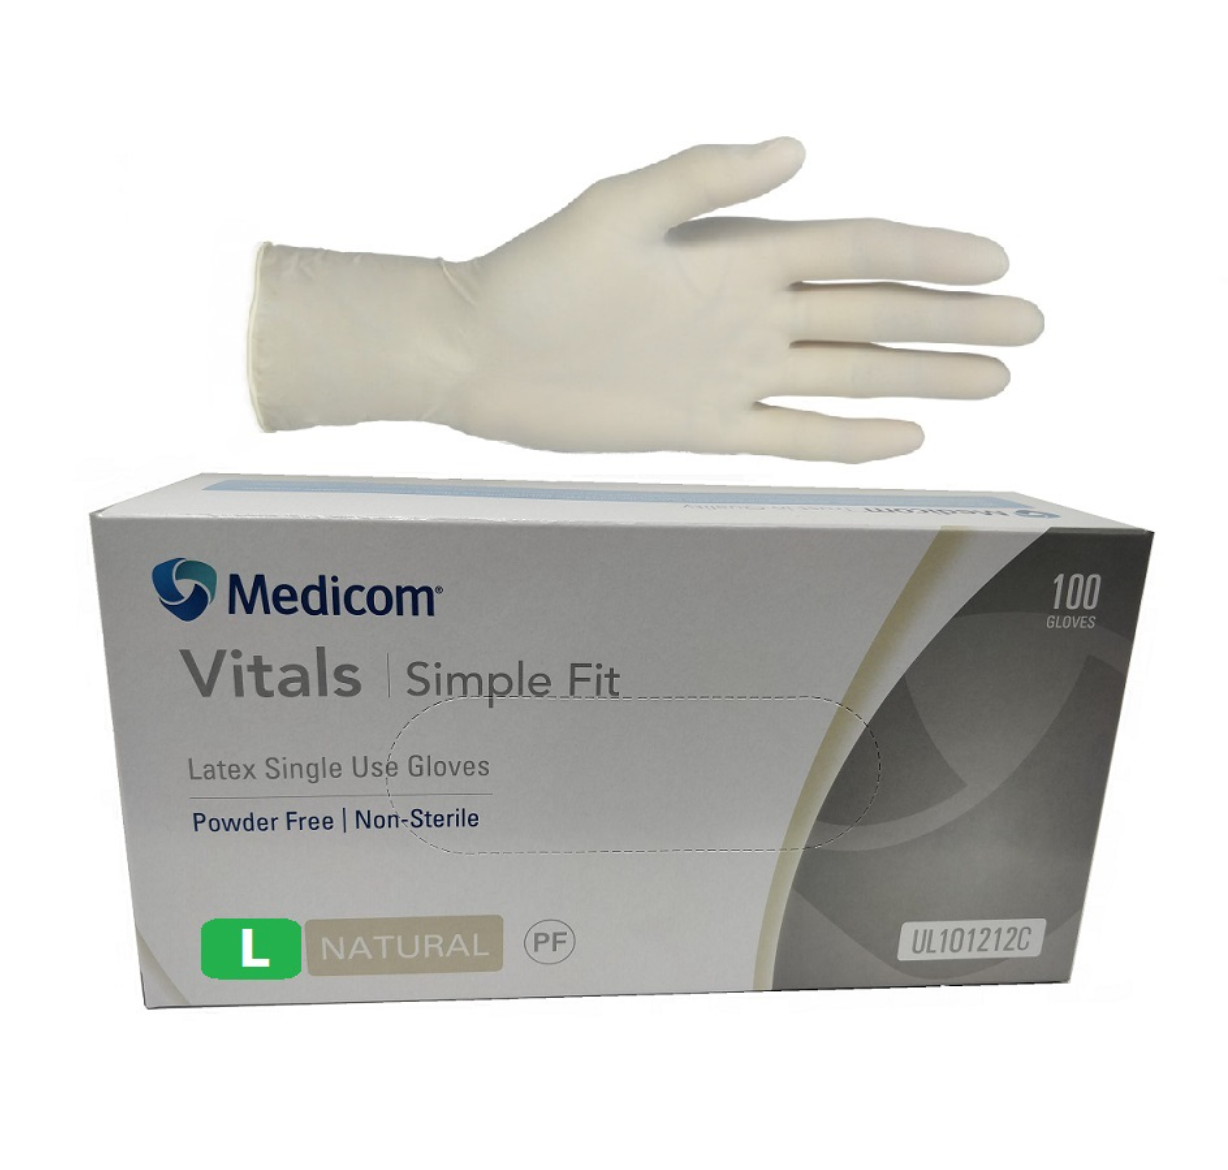 Medicom Vitals Latex Powder Free Gloves 100pk - Large